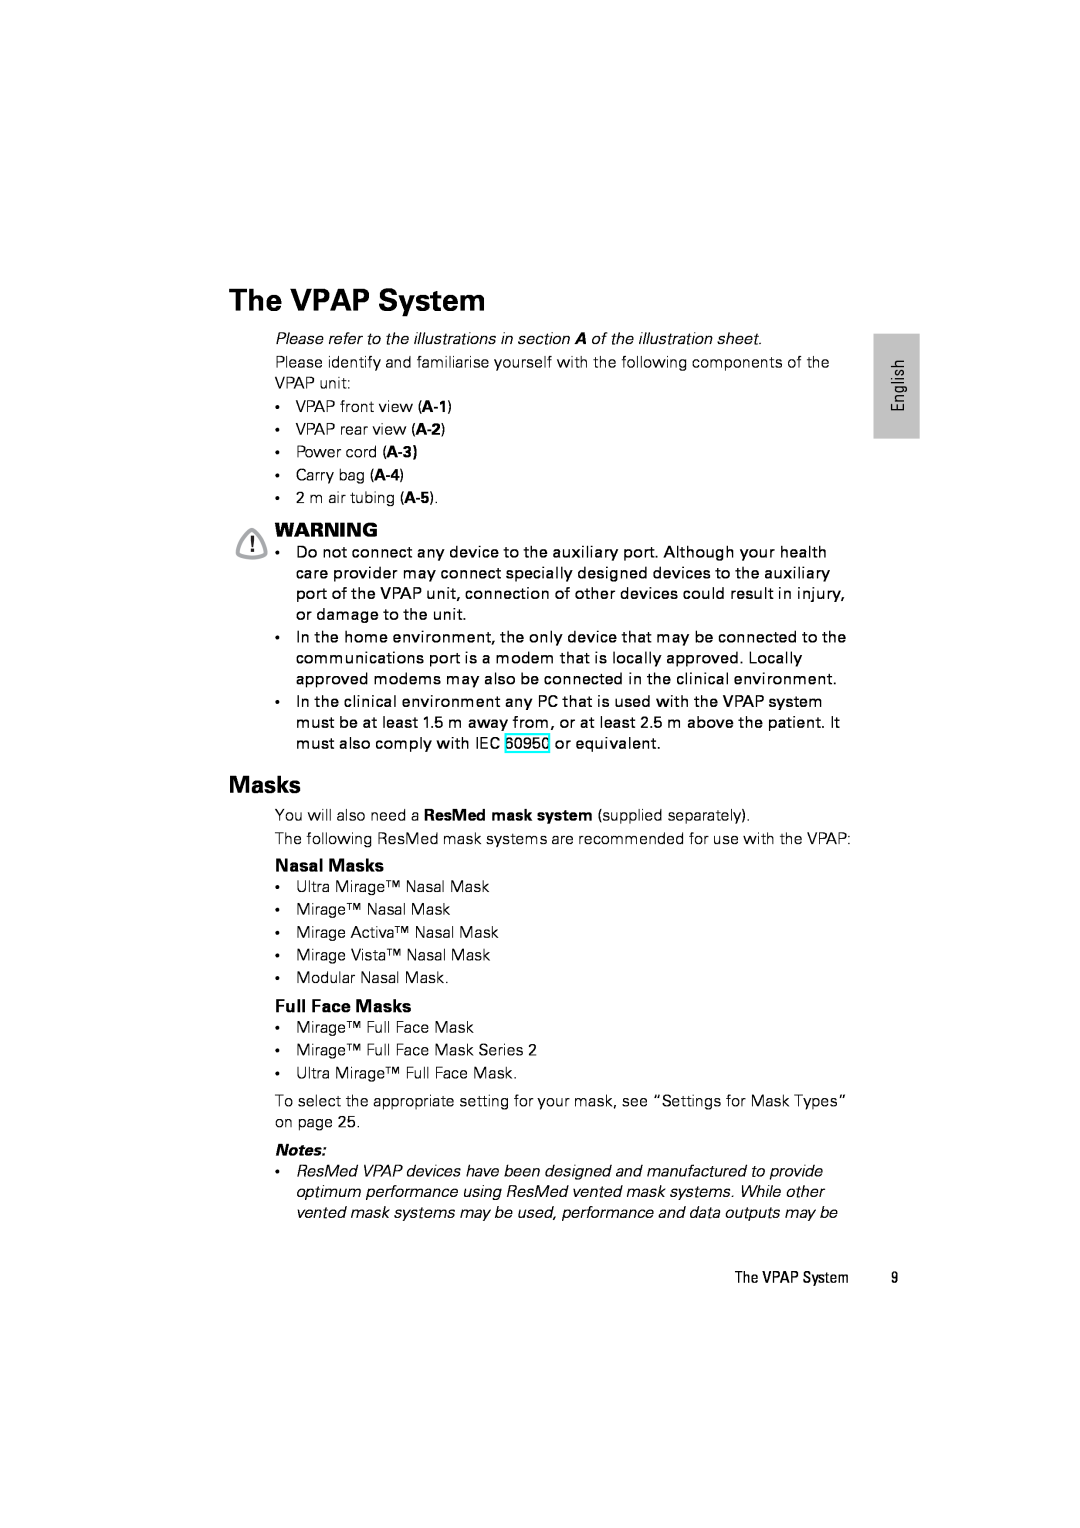 ResMed III & III ST user manual The VPAP System, Nasal Masks, Full Face Masks, Notes 